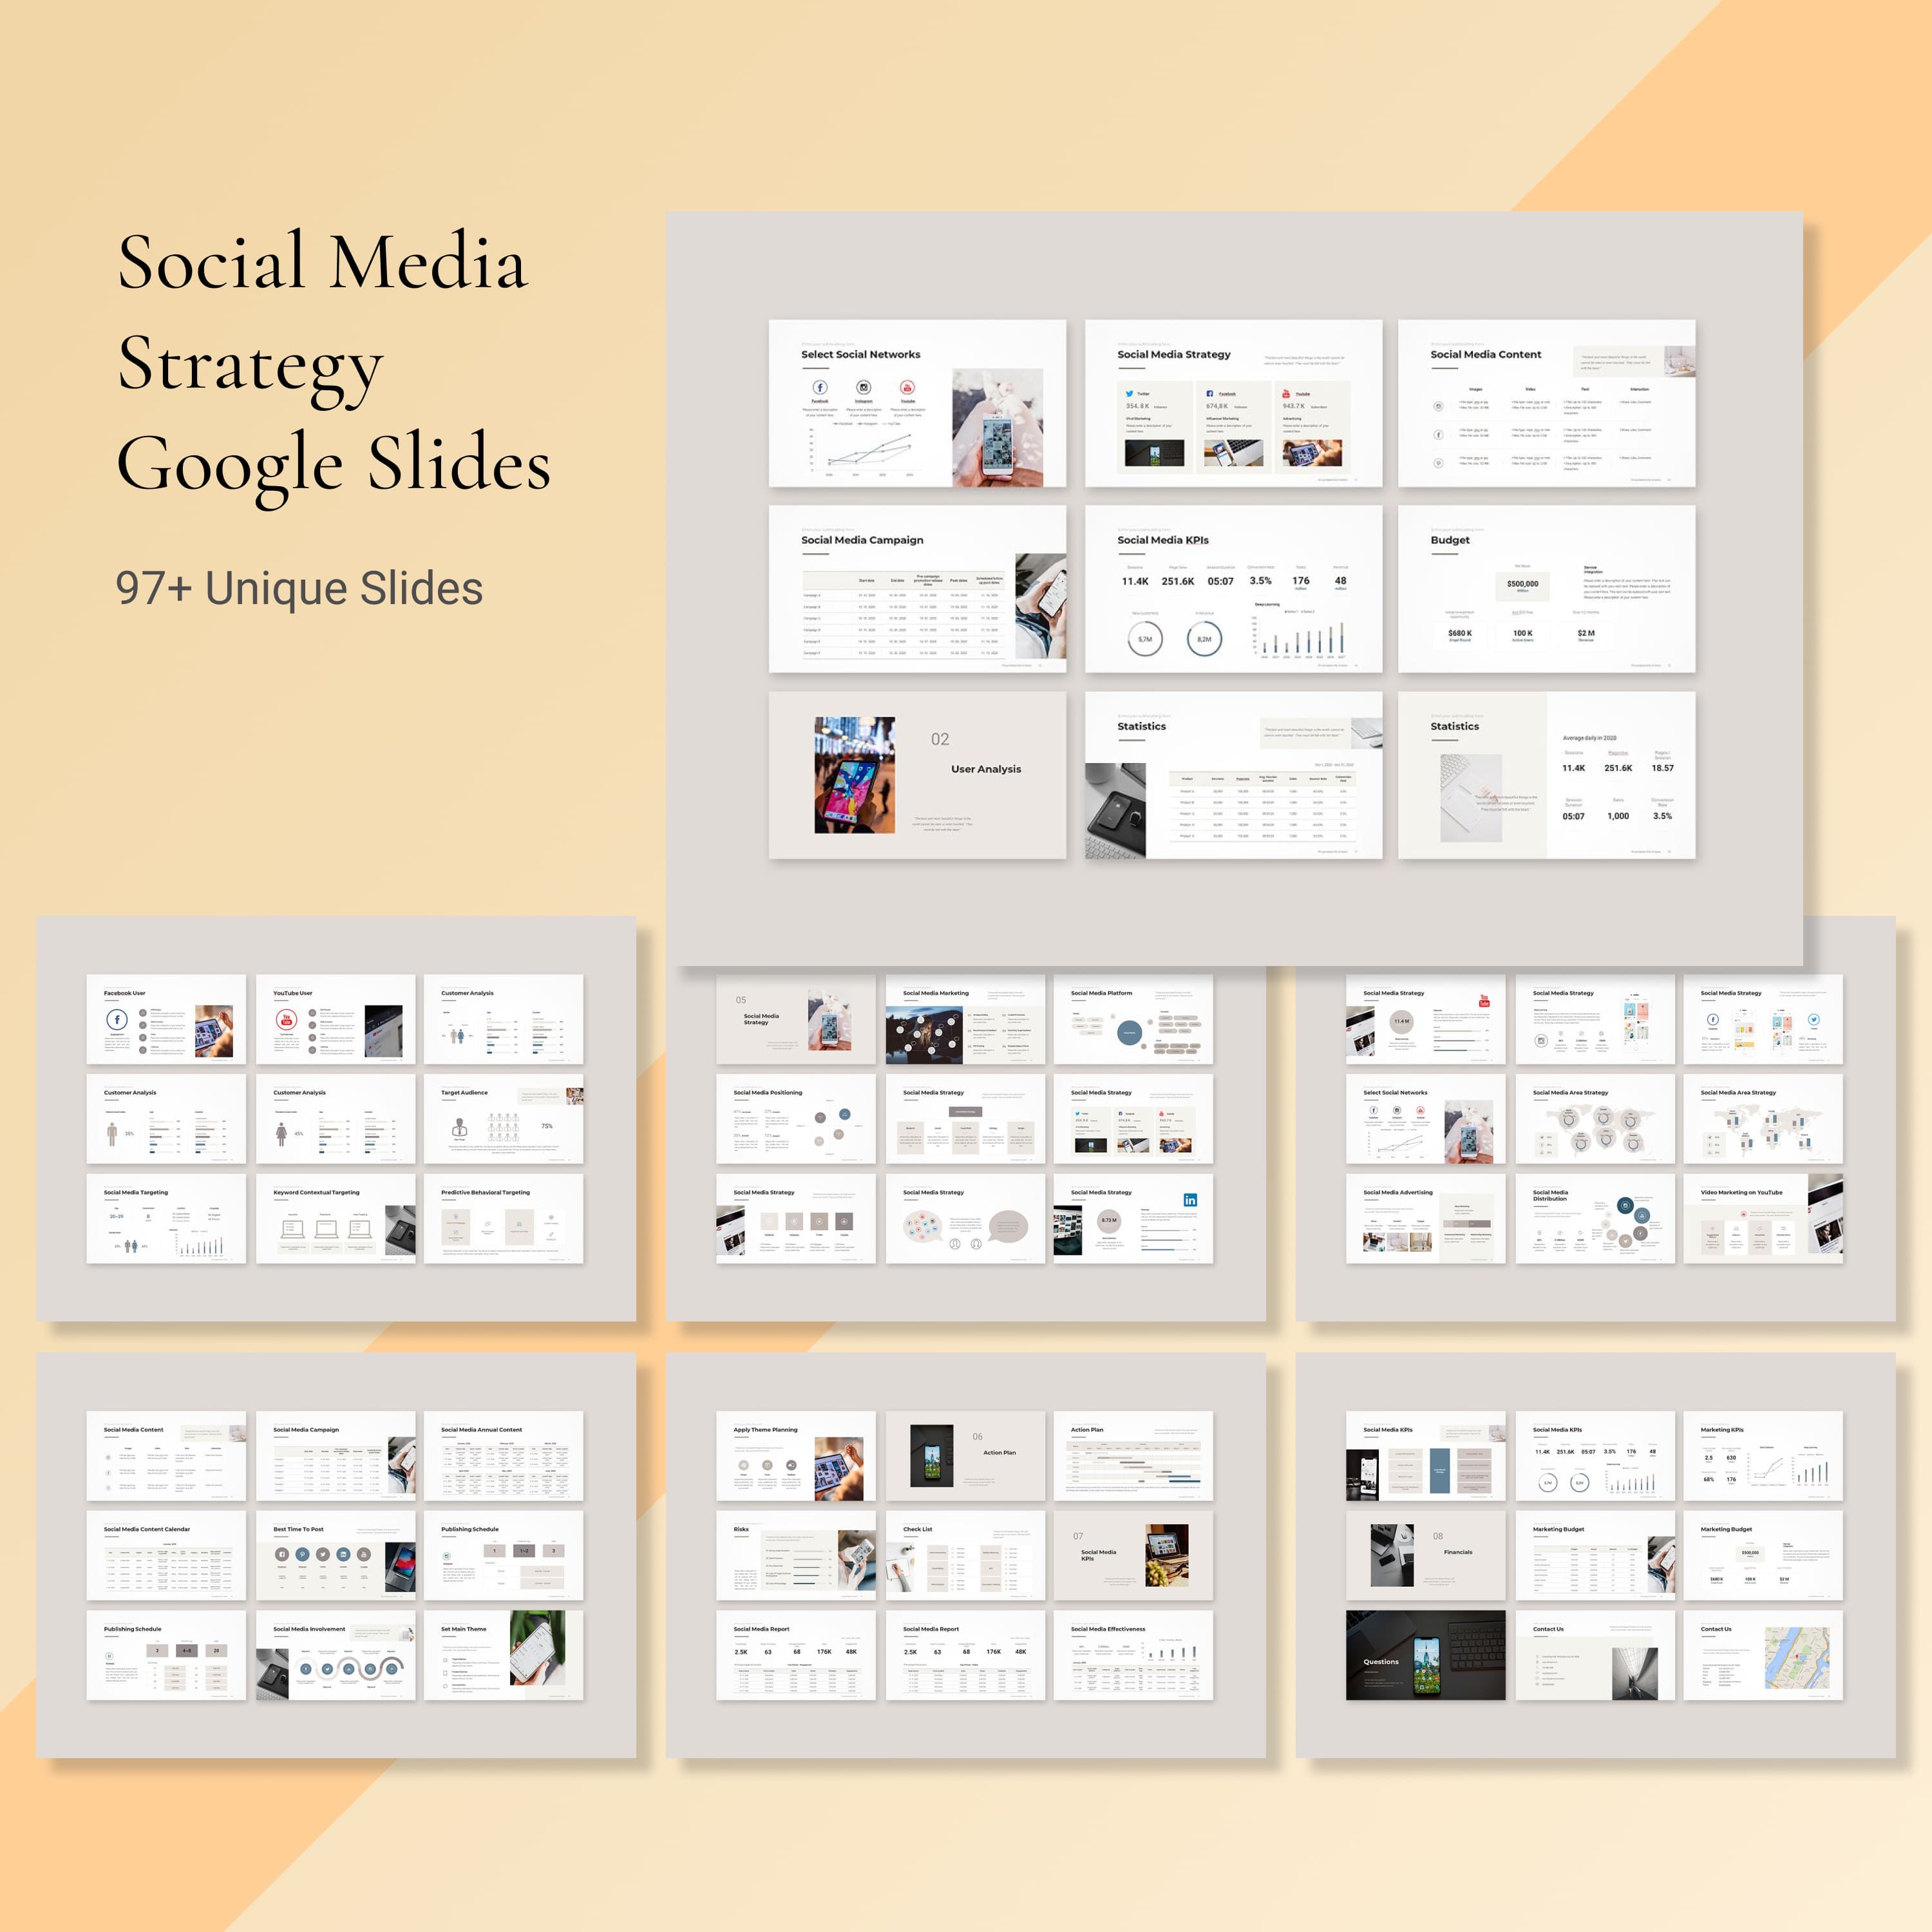 Social Media Strategy Google Slides cover.